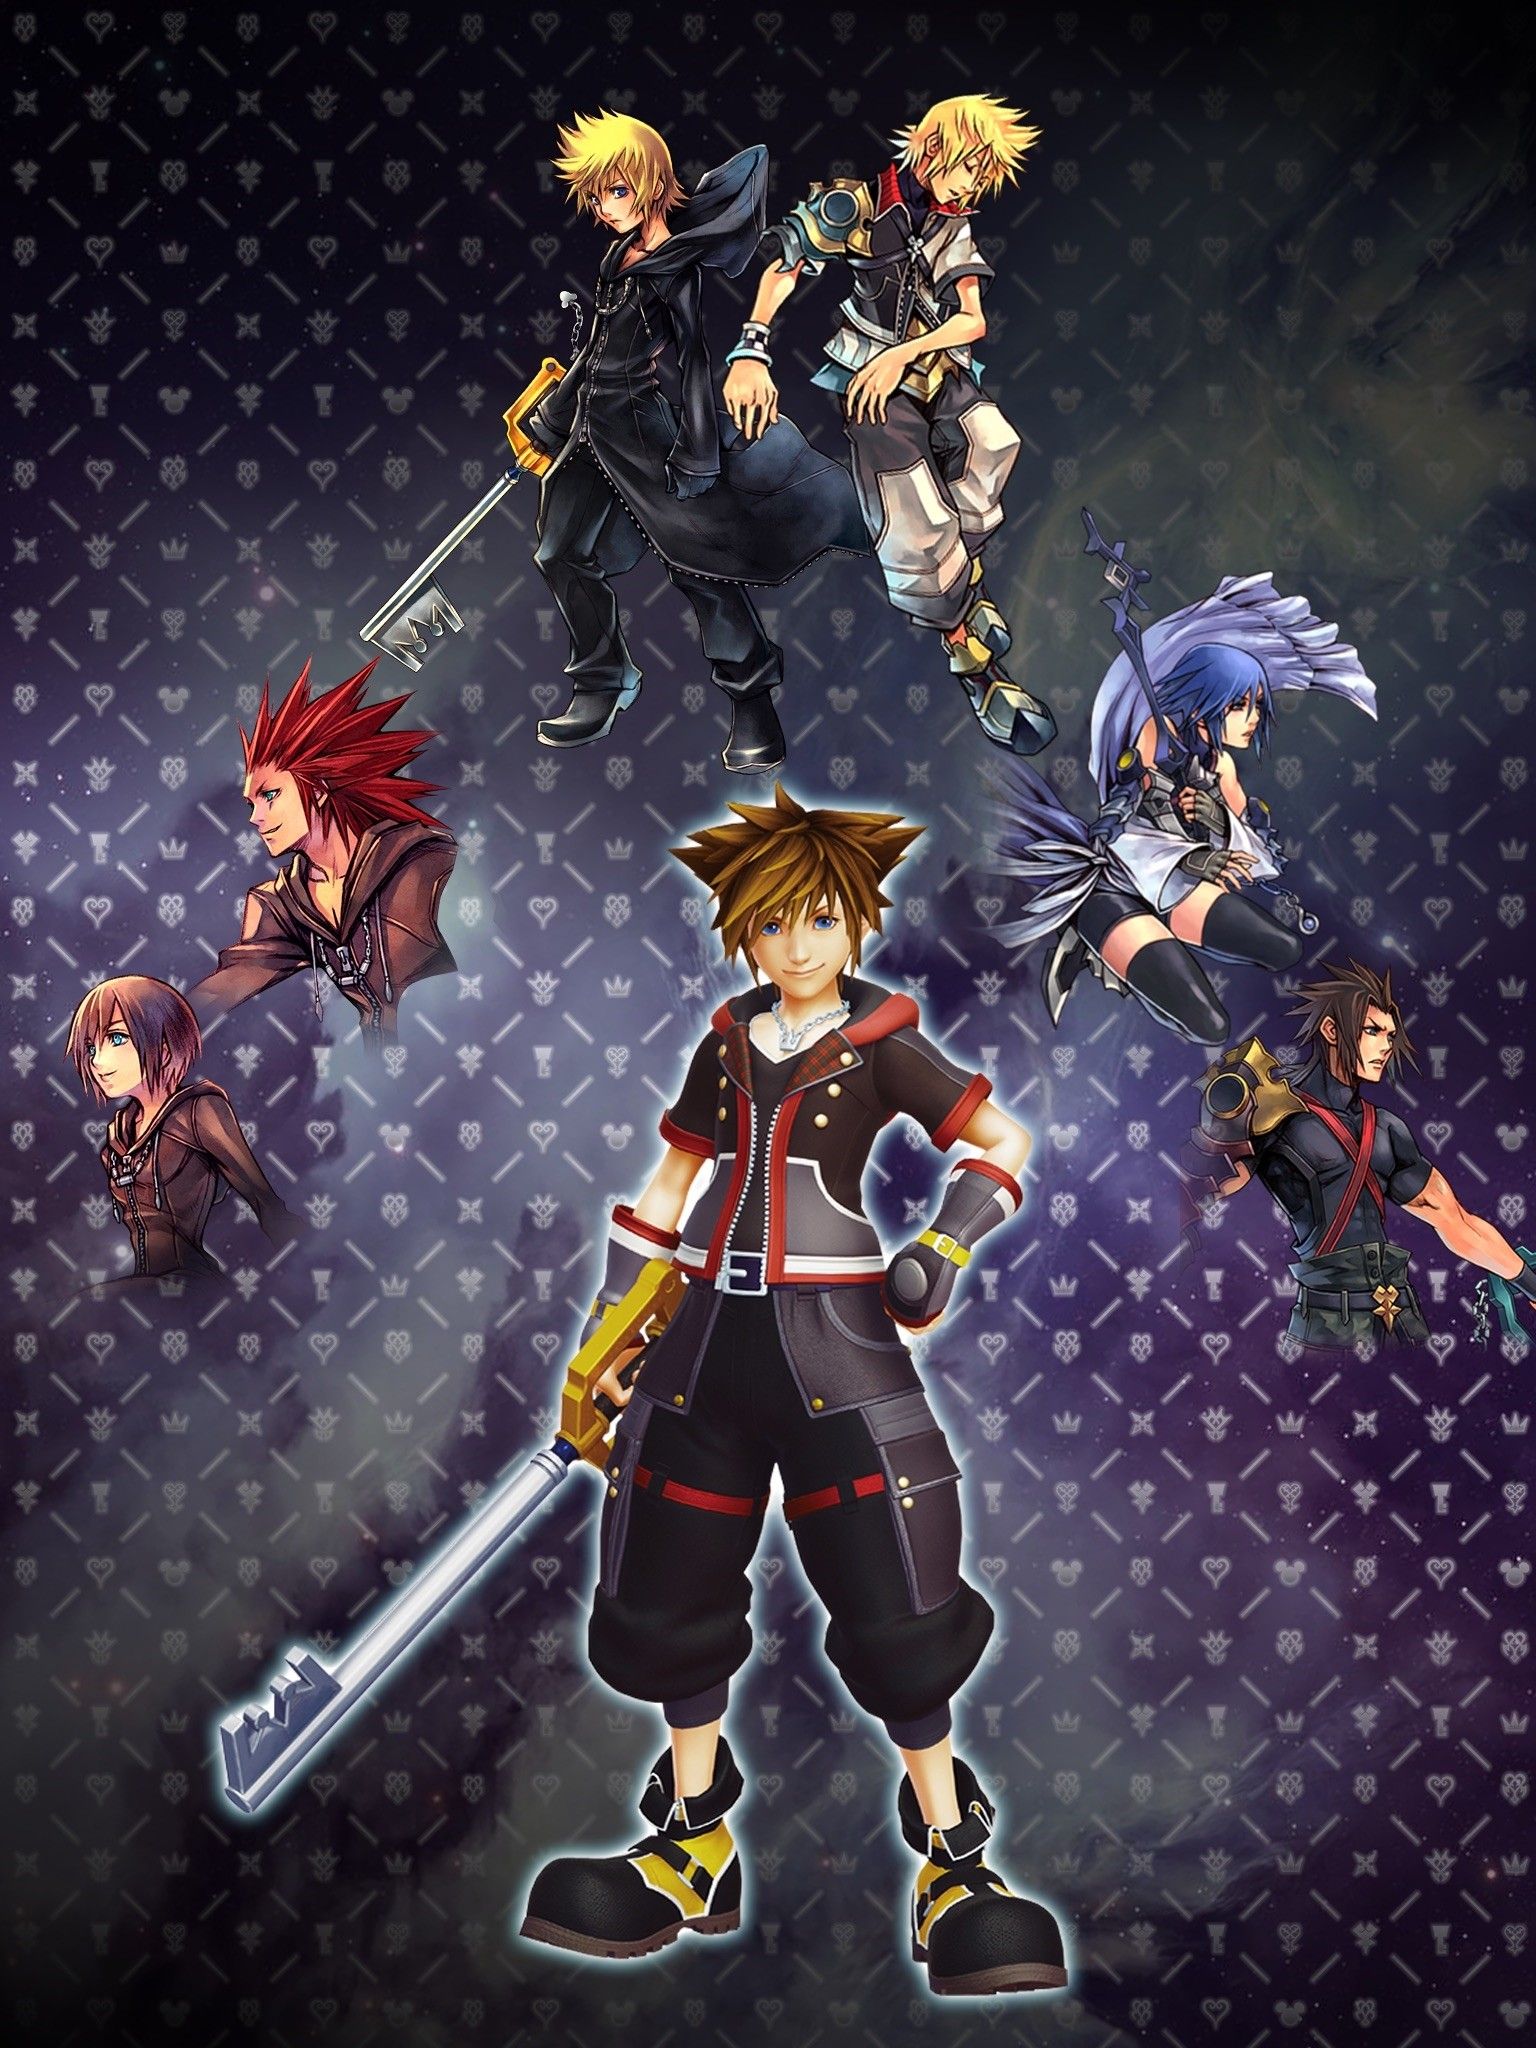 Kingdom Hearts Wallpaper iPhone